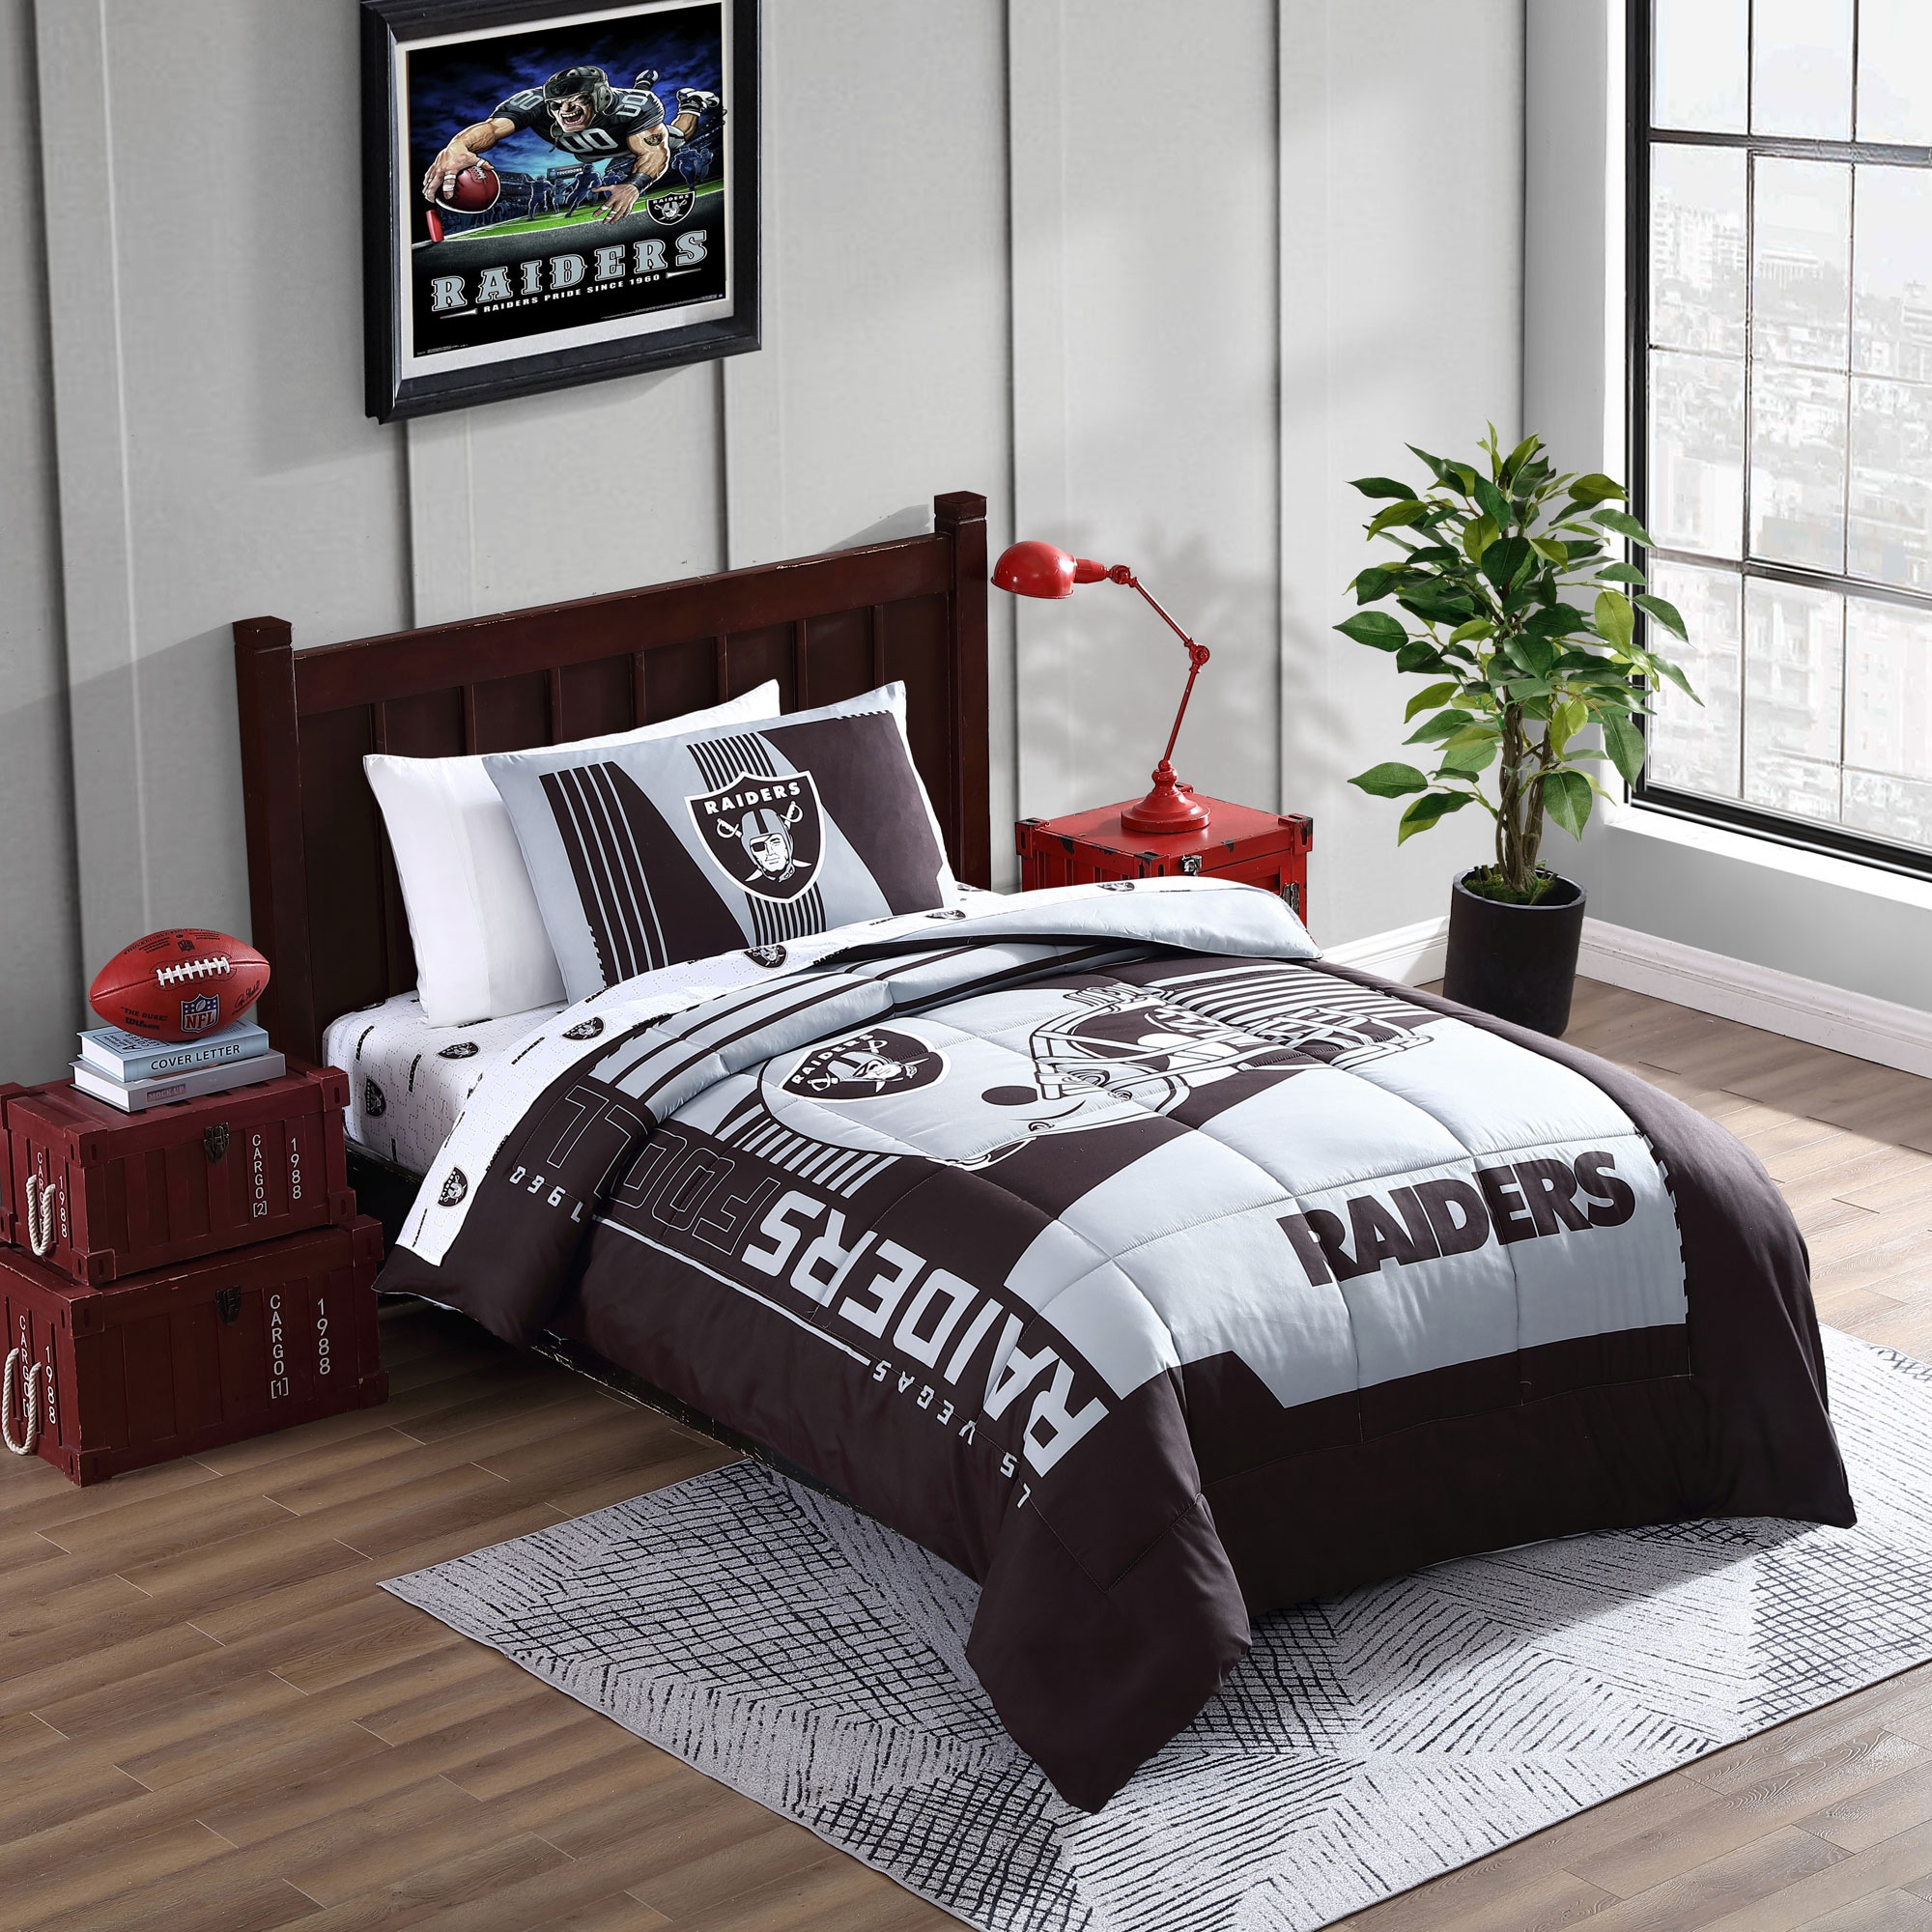 Las Vegas Raiders Comforter Cover Bedding Set 3PCS Quilt Duvet